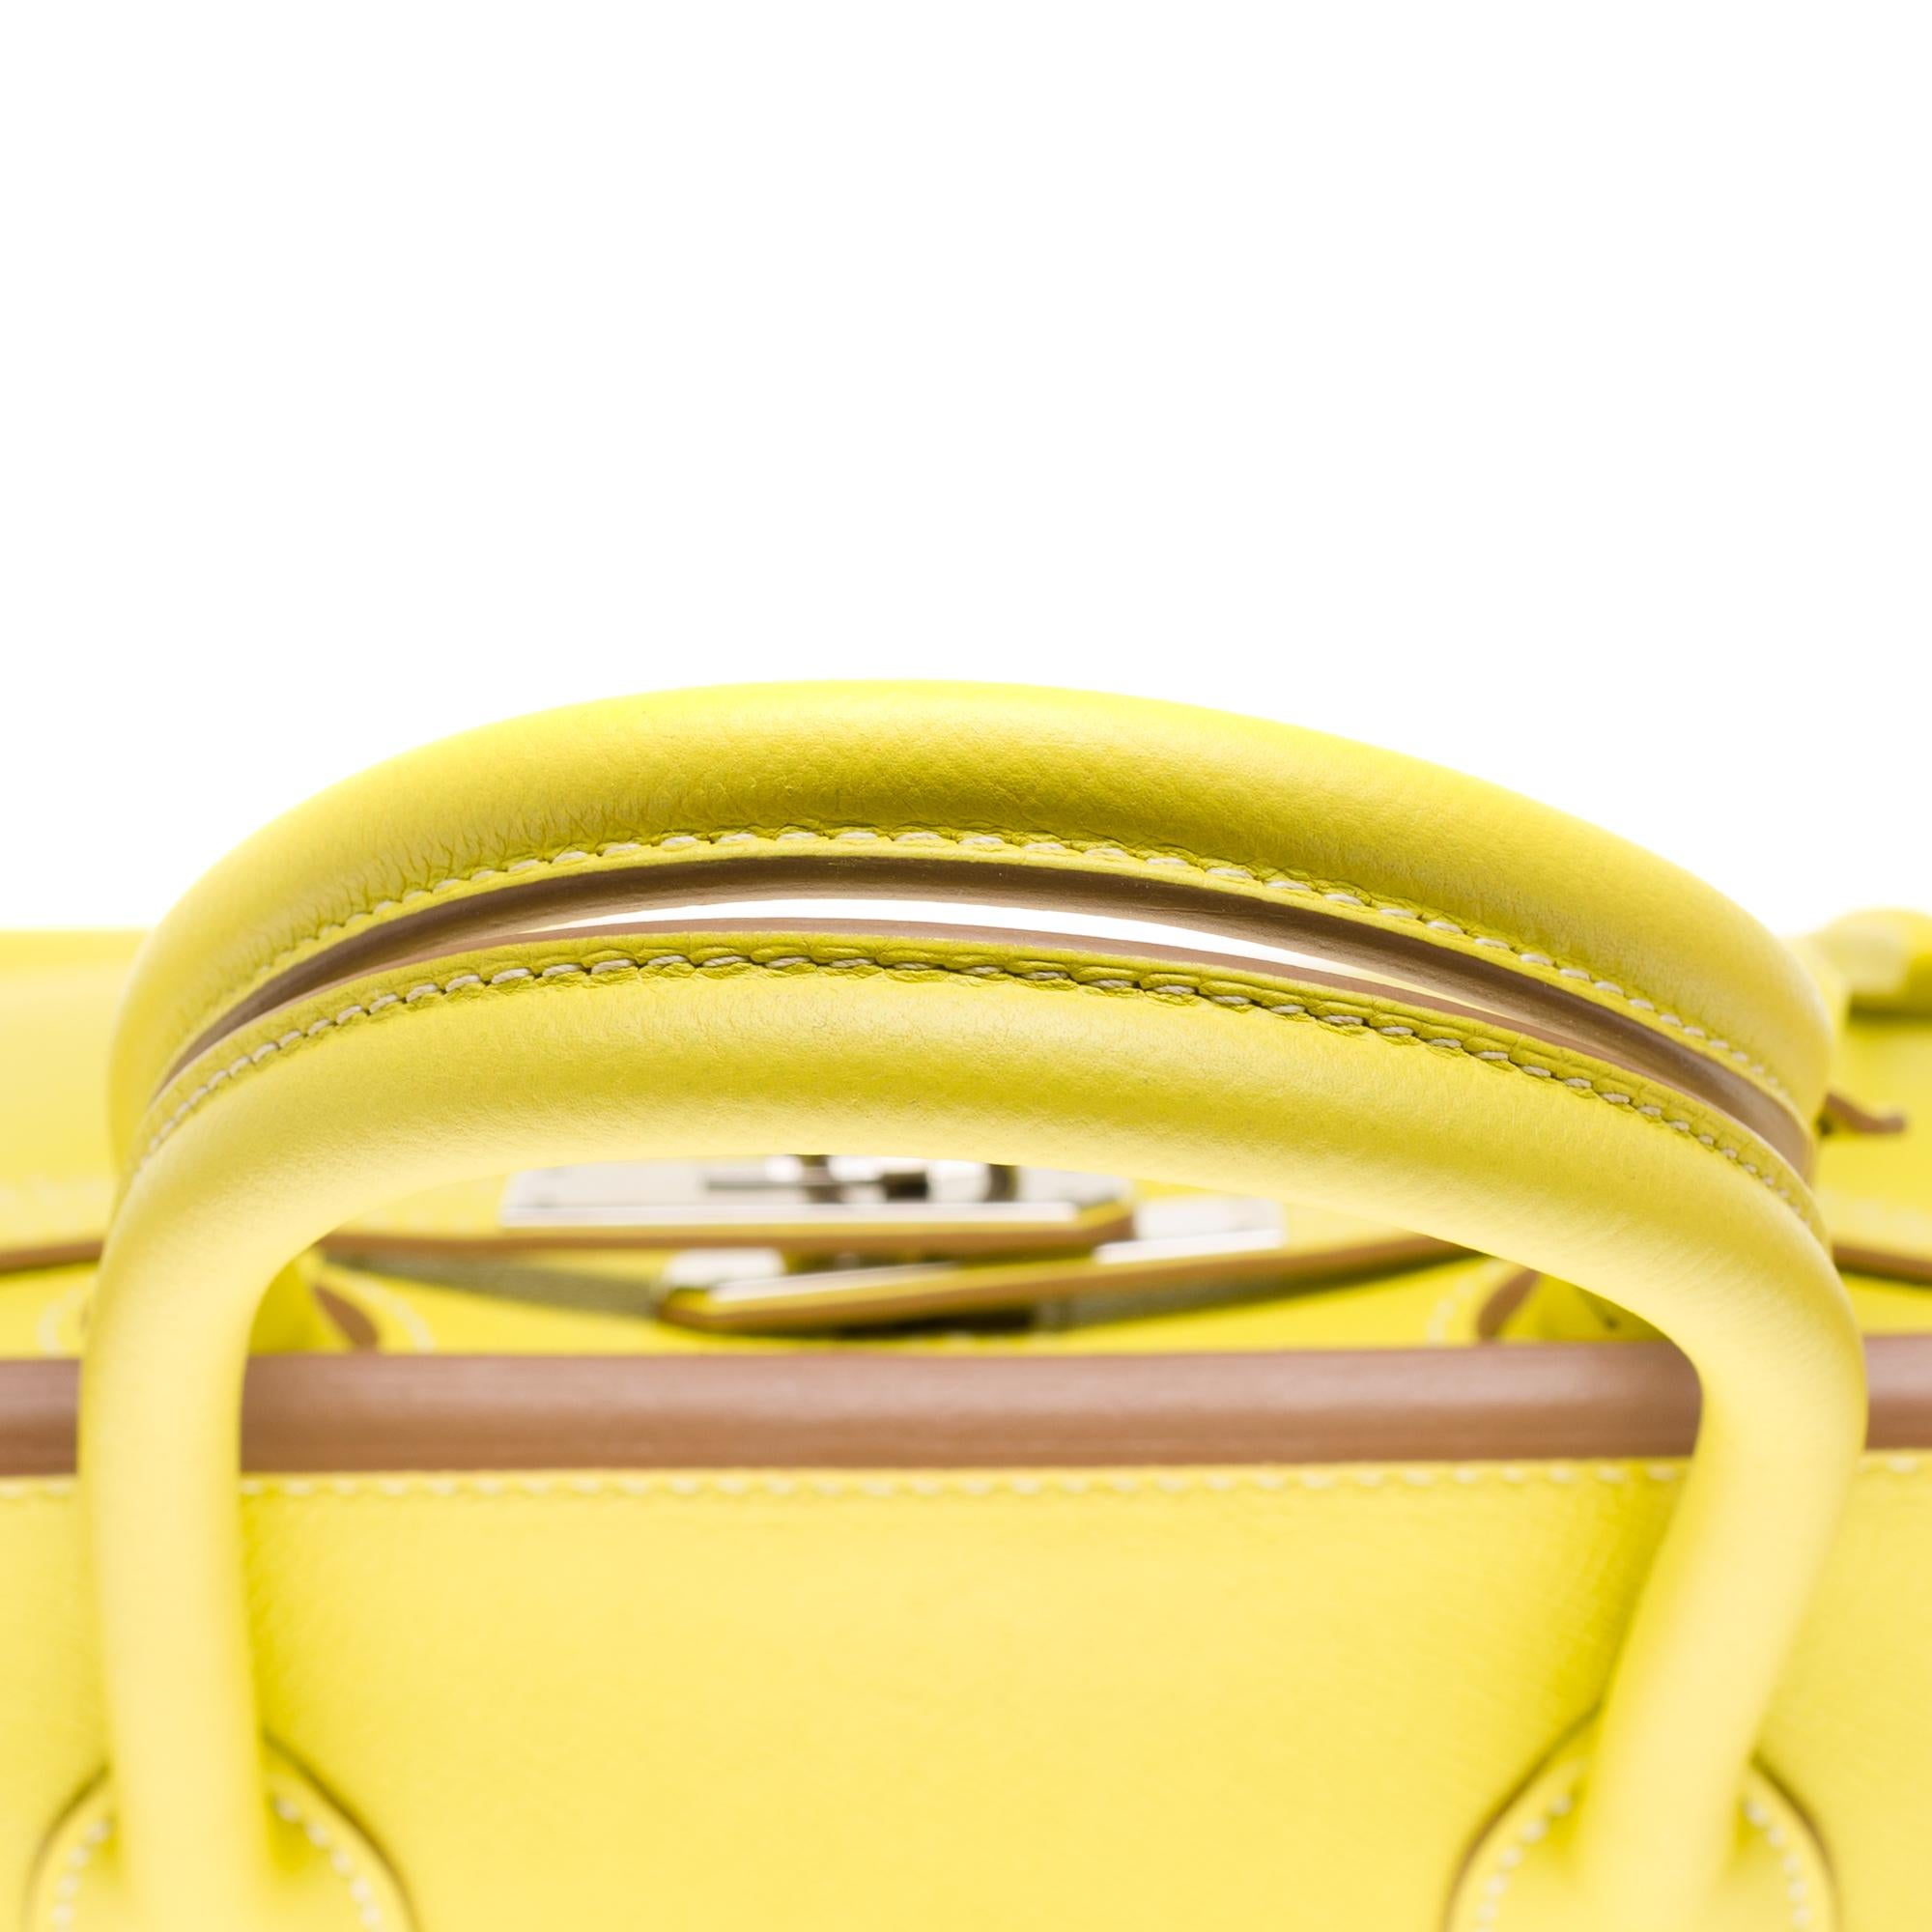 Women's Hermès Birkin 35 handbag in yellow epsom leather & grey interior with PHW !